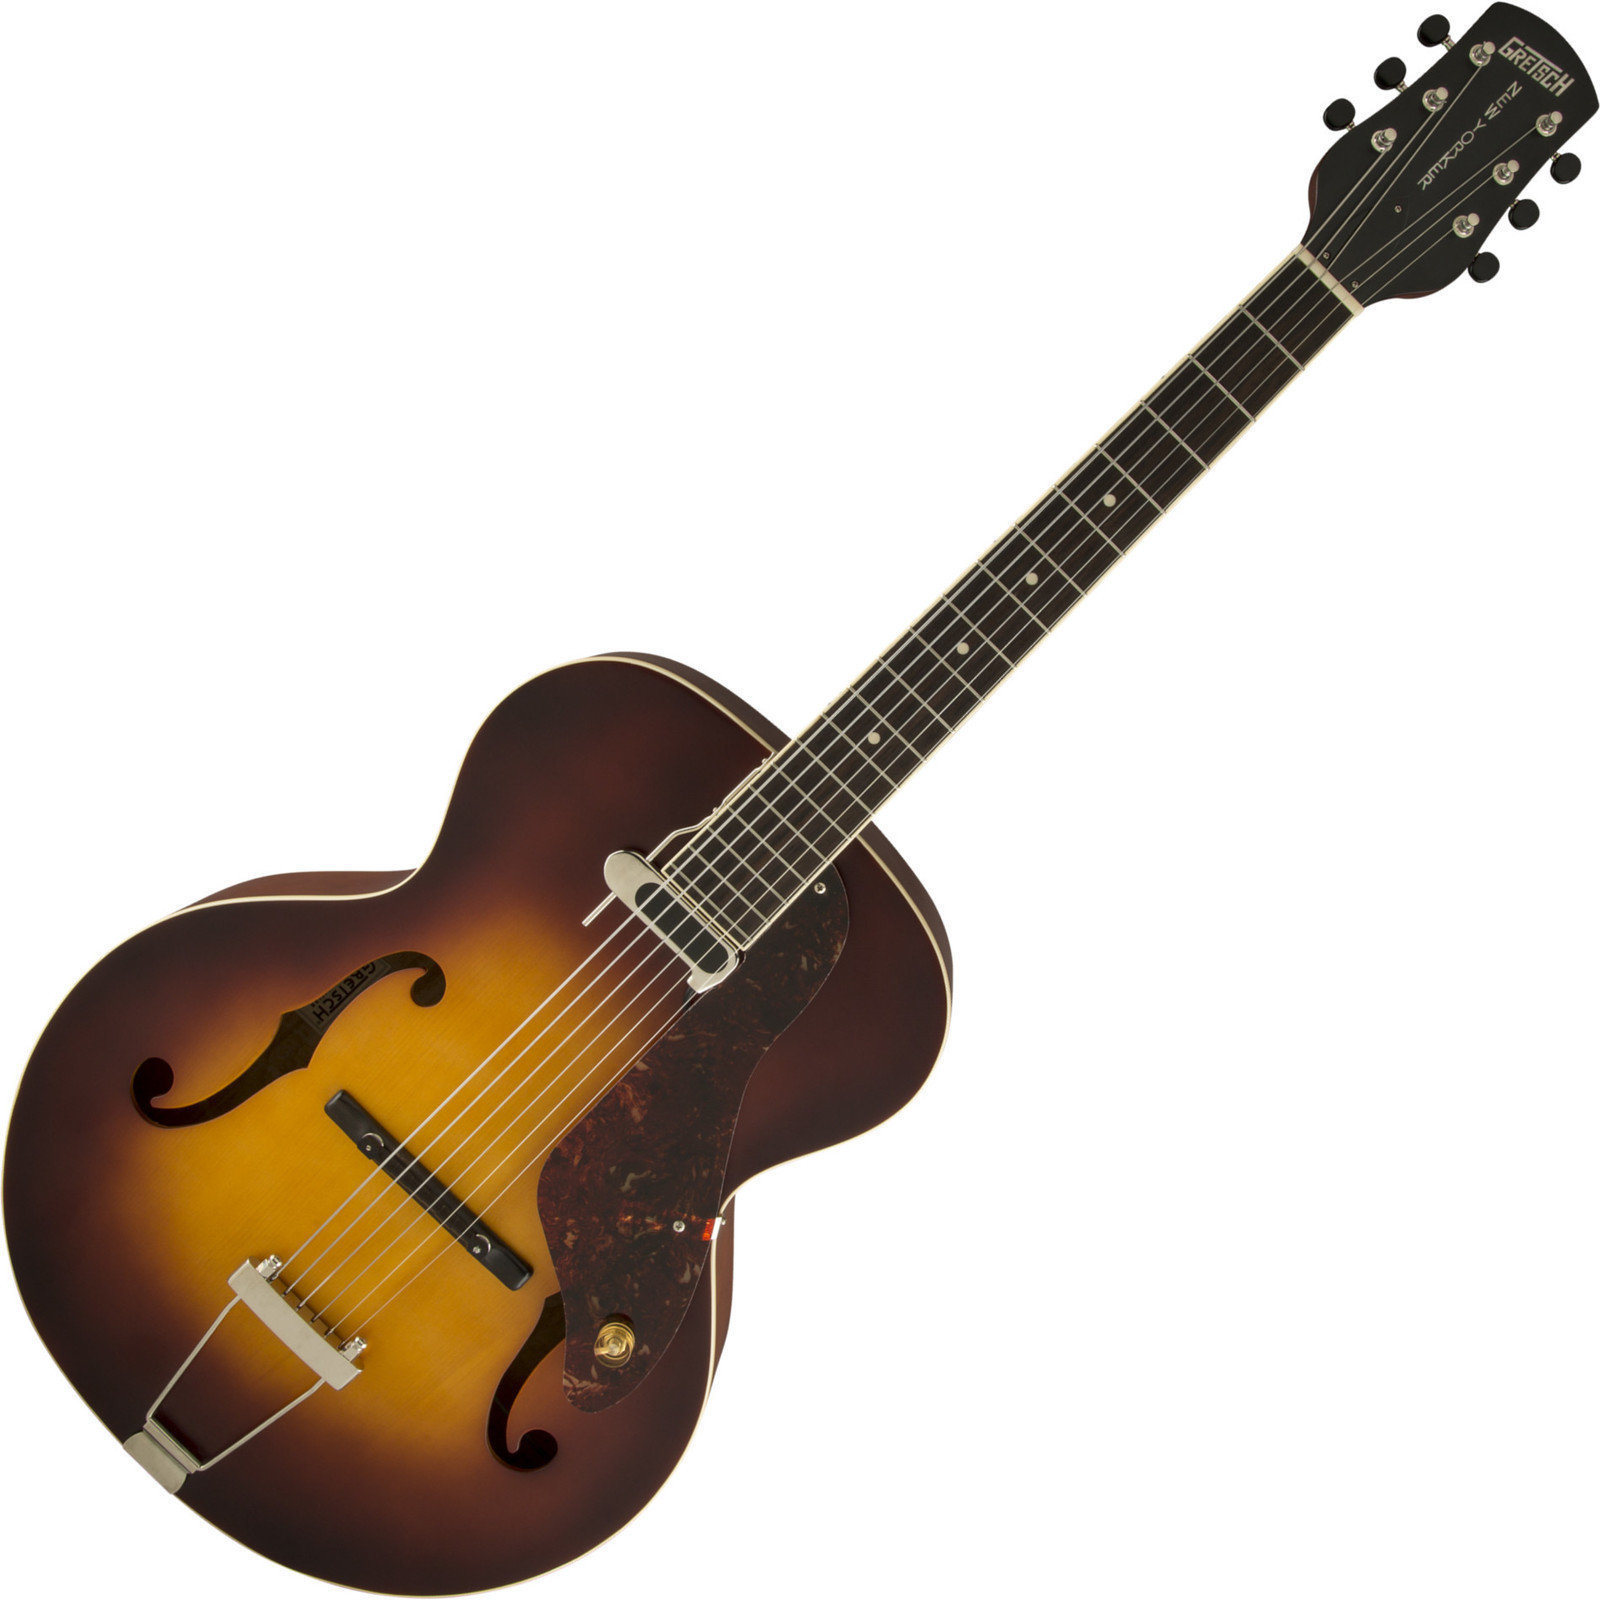 Semiakustická kytara Gretsch G9555 New Yorker Archtop Katalox FB Vintage Sunburst